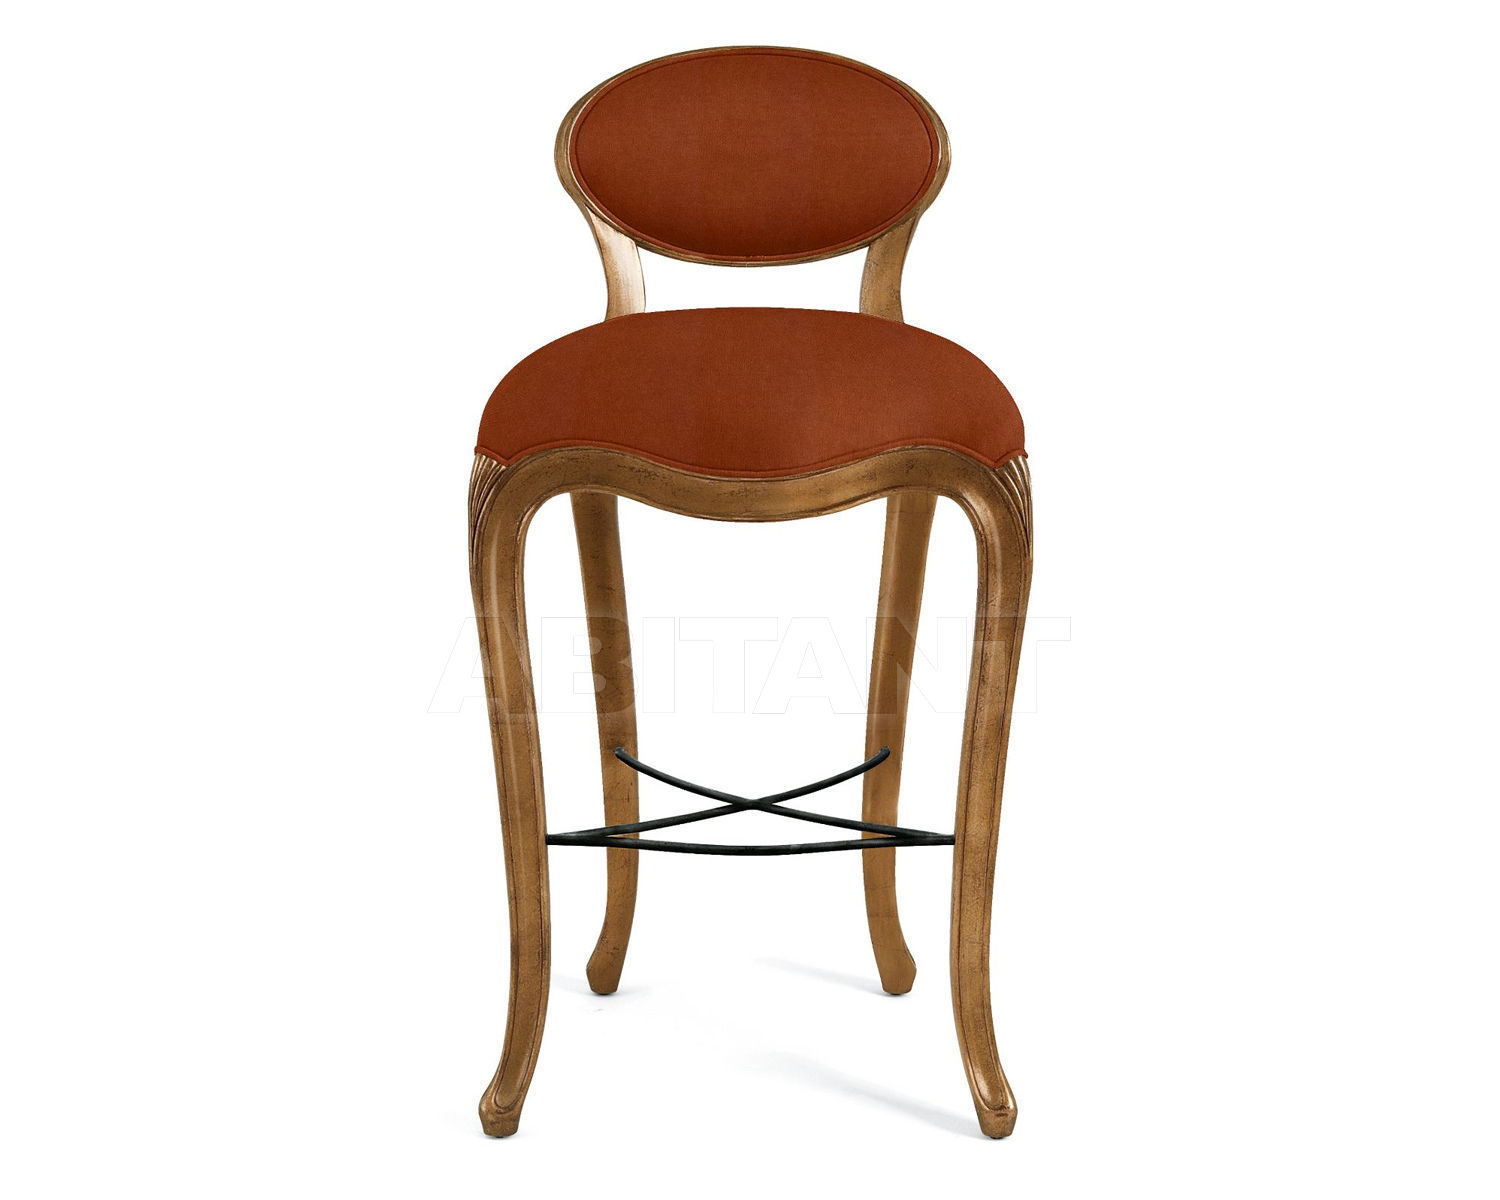 Buy Bar stool Cafe de Paris Christopher Guy 2014 60-0024-DD Confiture